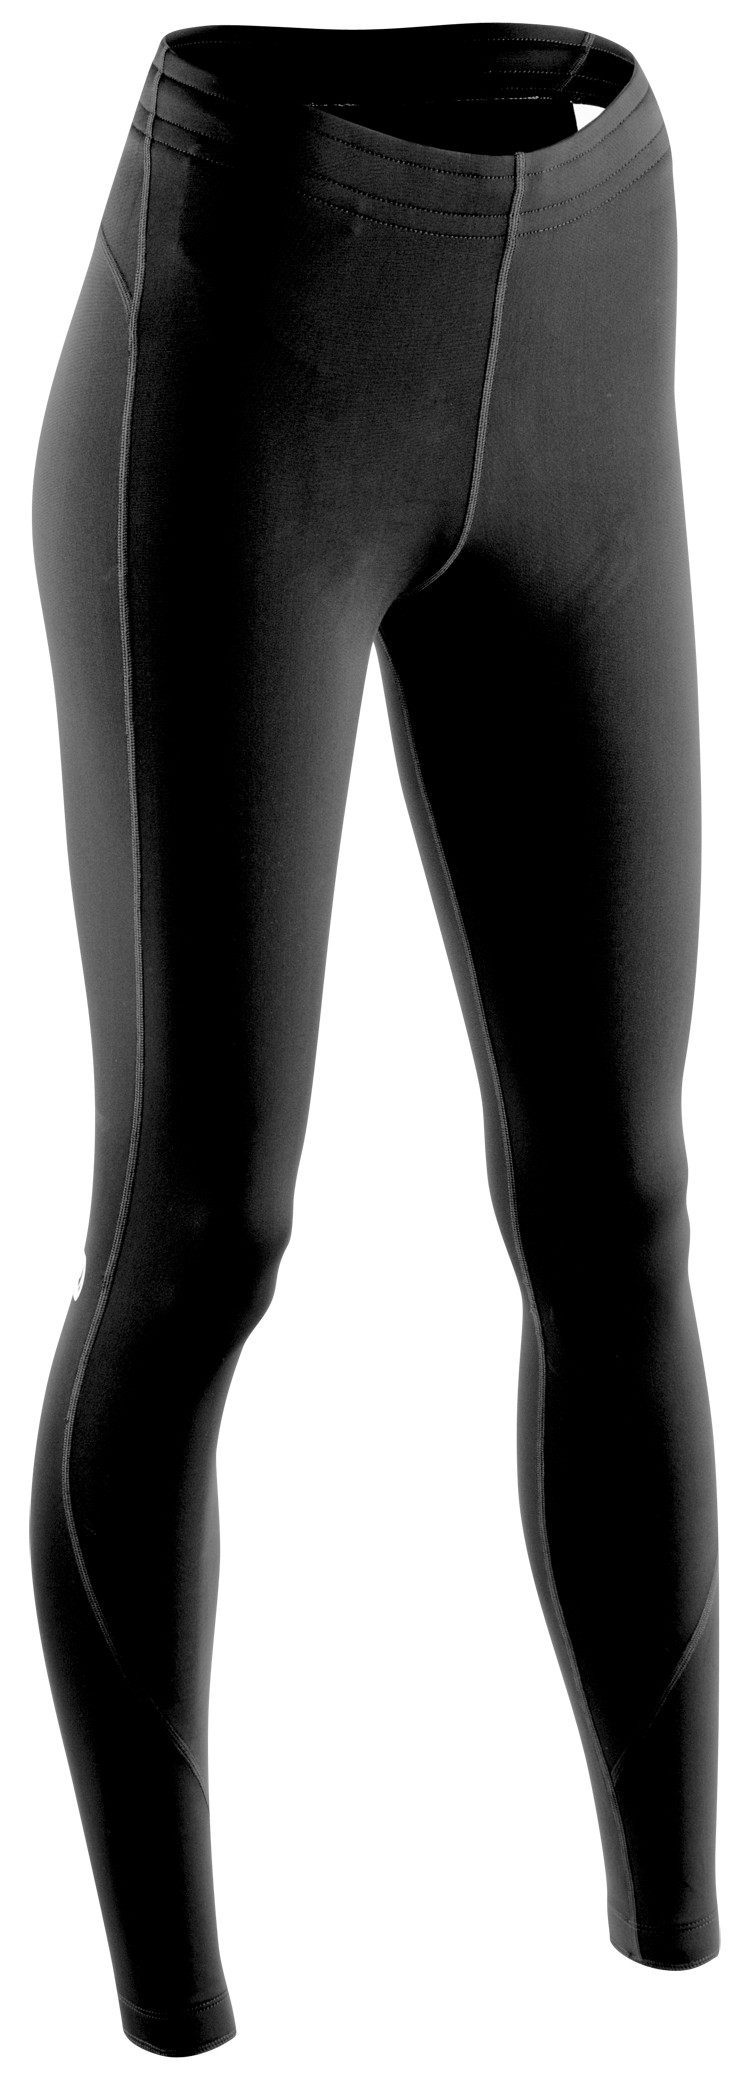 Рейтузы Sugoi Linear MIDZERO TIGHT, женские, gunmetal/black (серо-черные), S фото 